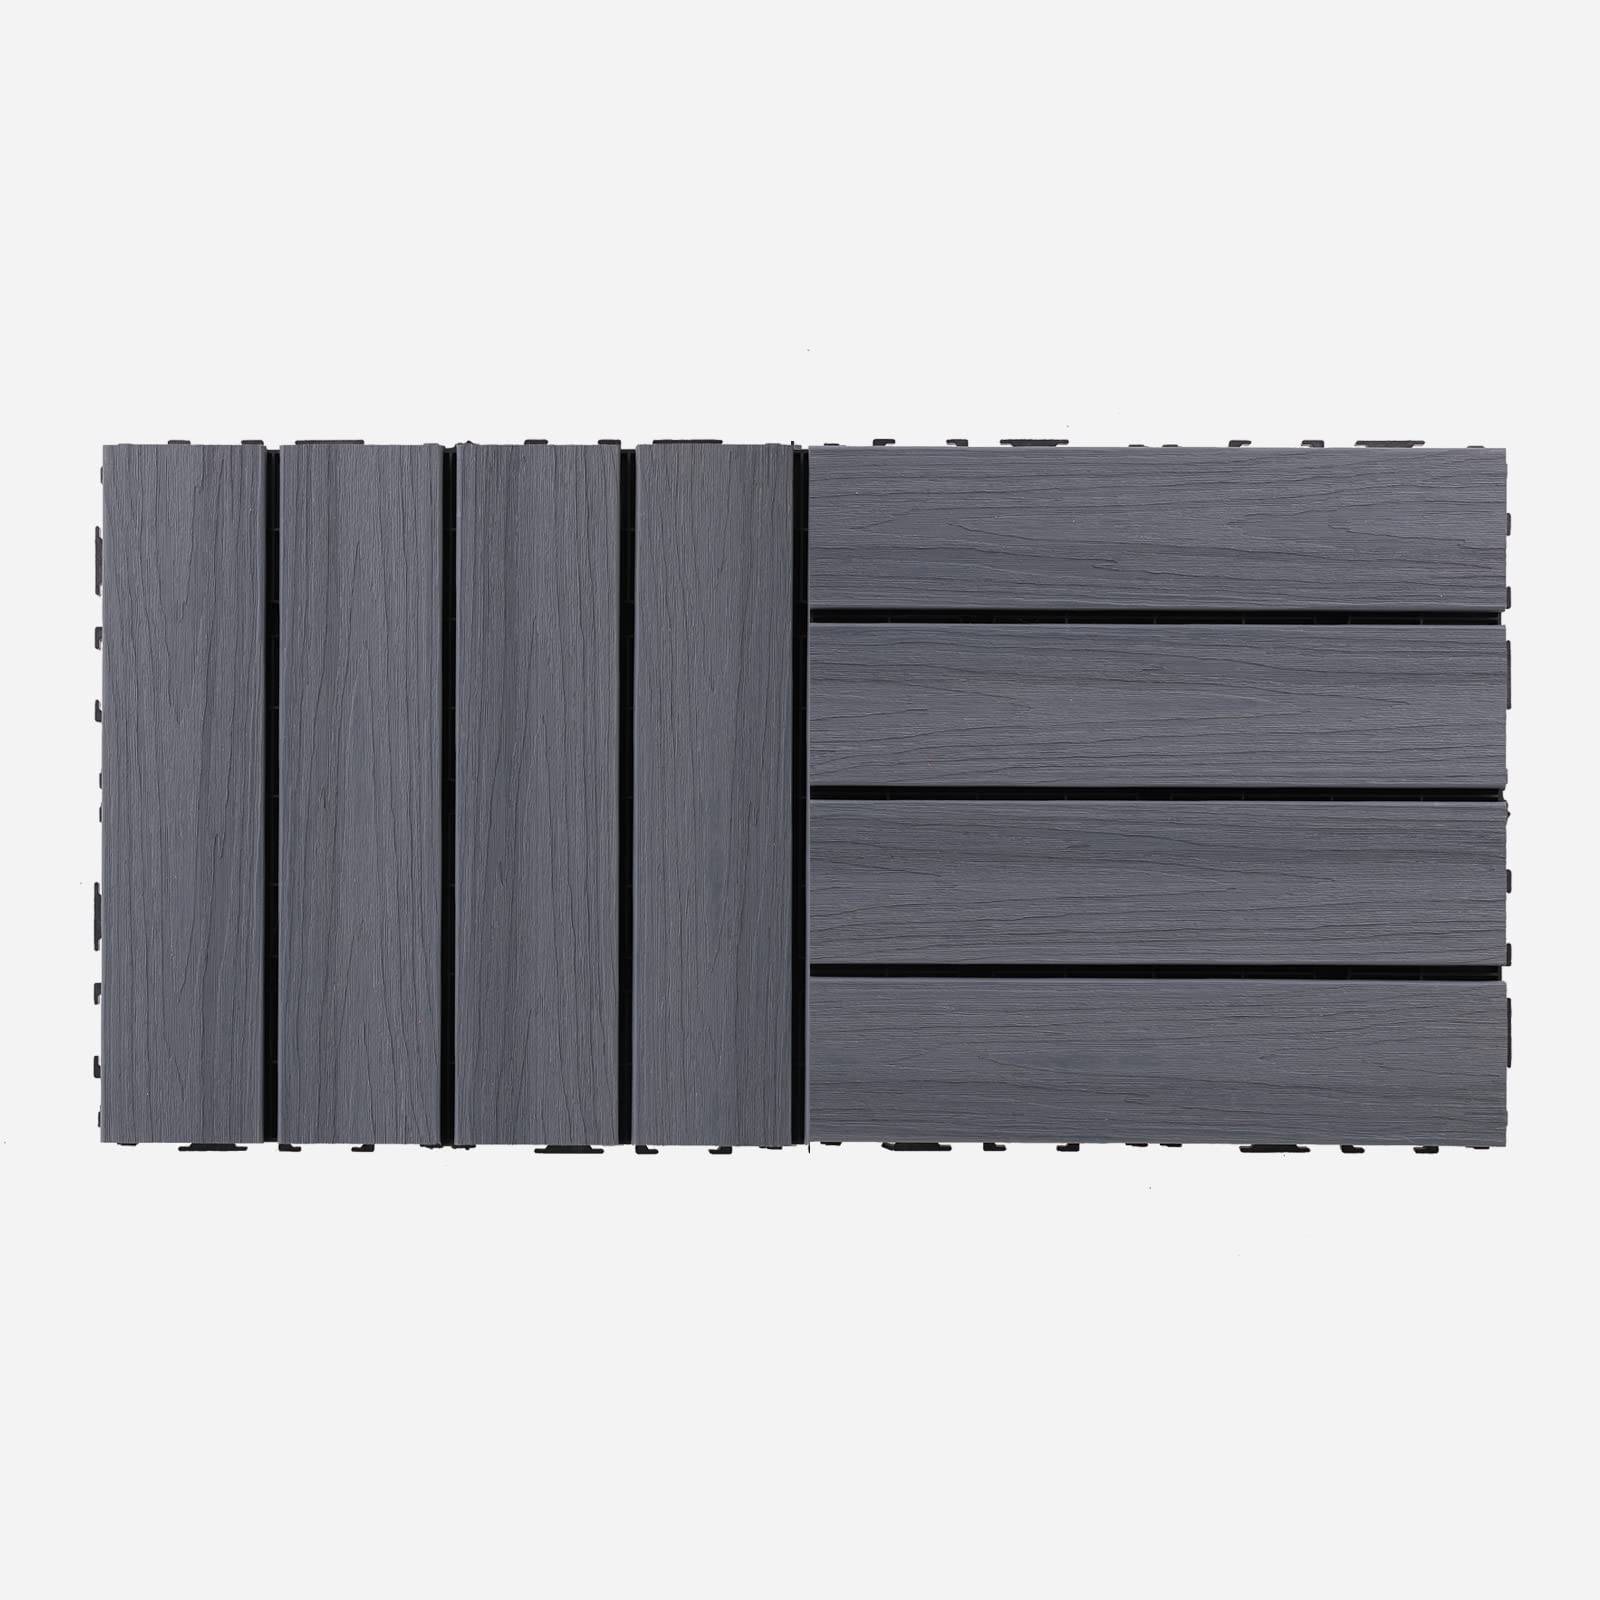 Cheston Interlocking Tiles I Wooden Floor Sheets I Interlocking Tiles for Indoor/Outdoor I Weather & Water Resistant I Flooring Solution I 12" X 12" Deck Tiles (Set of 2, Dusk Grey)